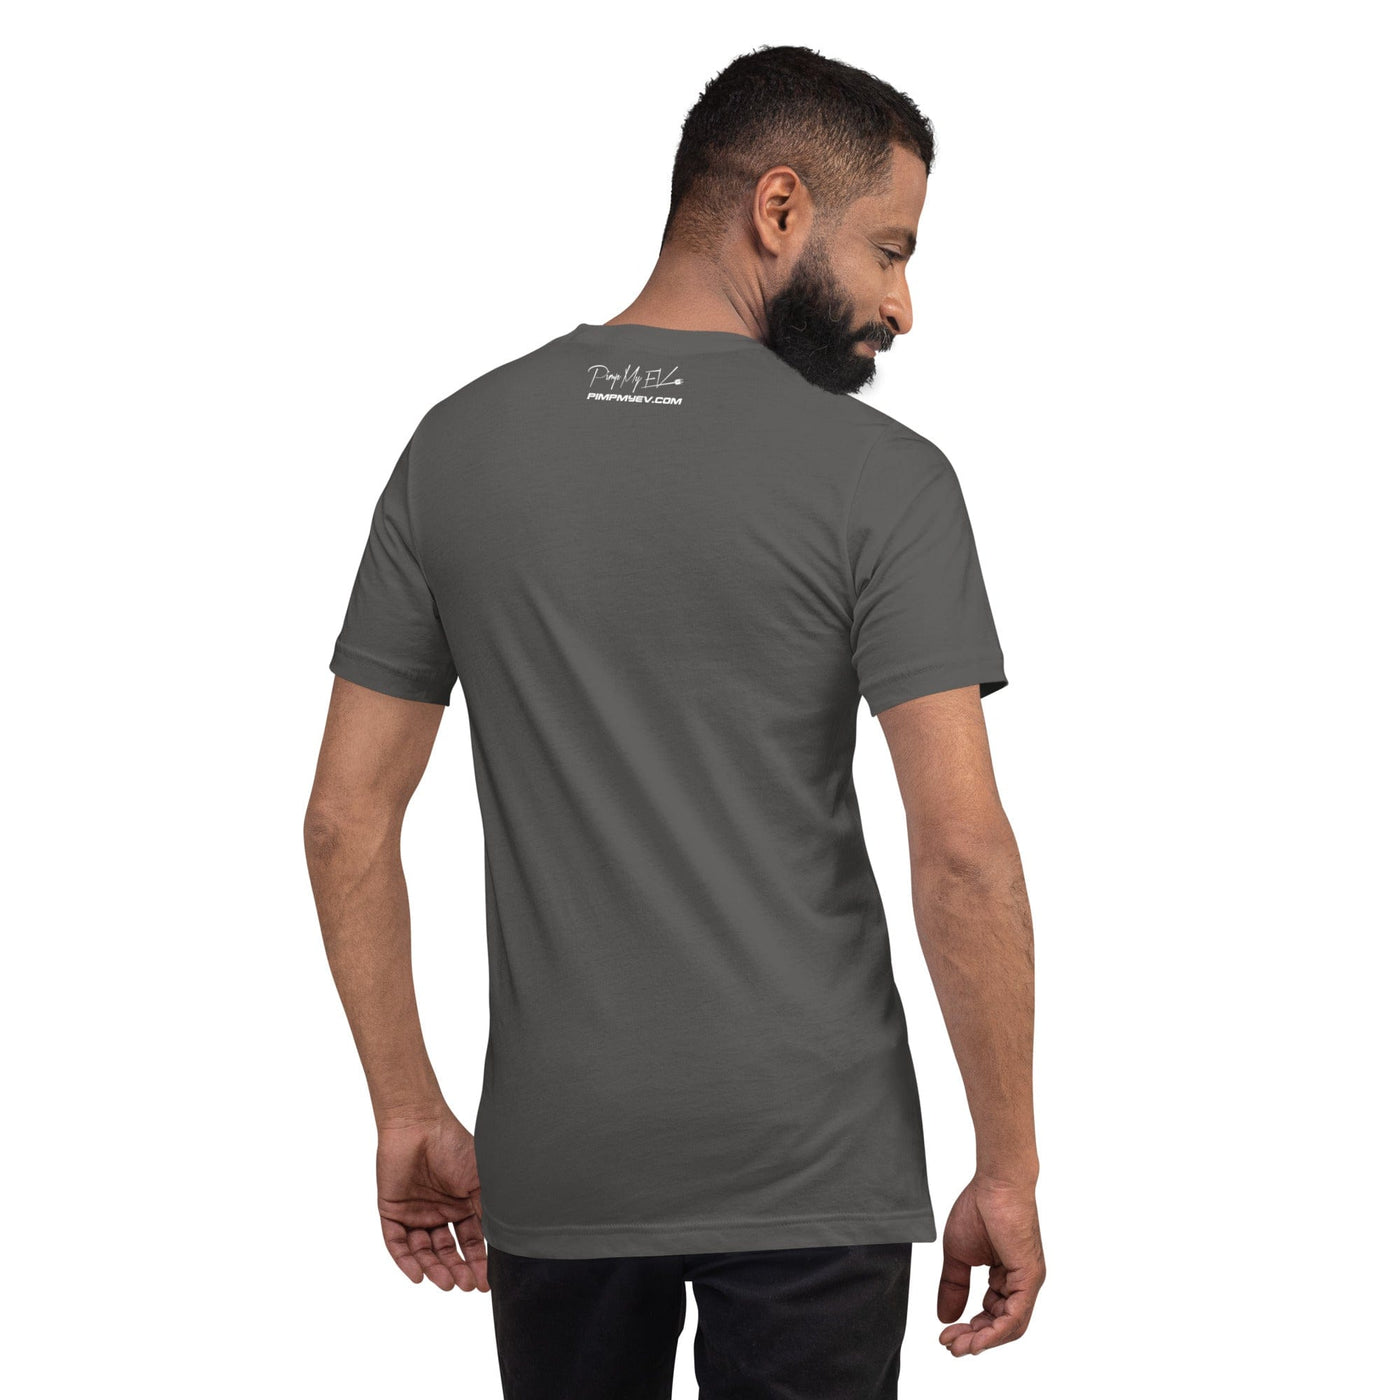 1/4 Quarter Mile Demon Short Sleeve Unisex t-shirt Tesla Plaid - PimpMyEV